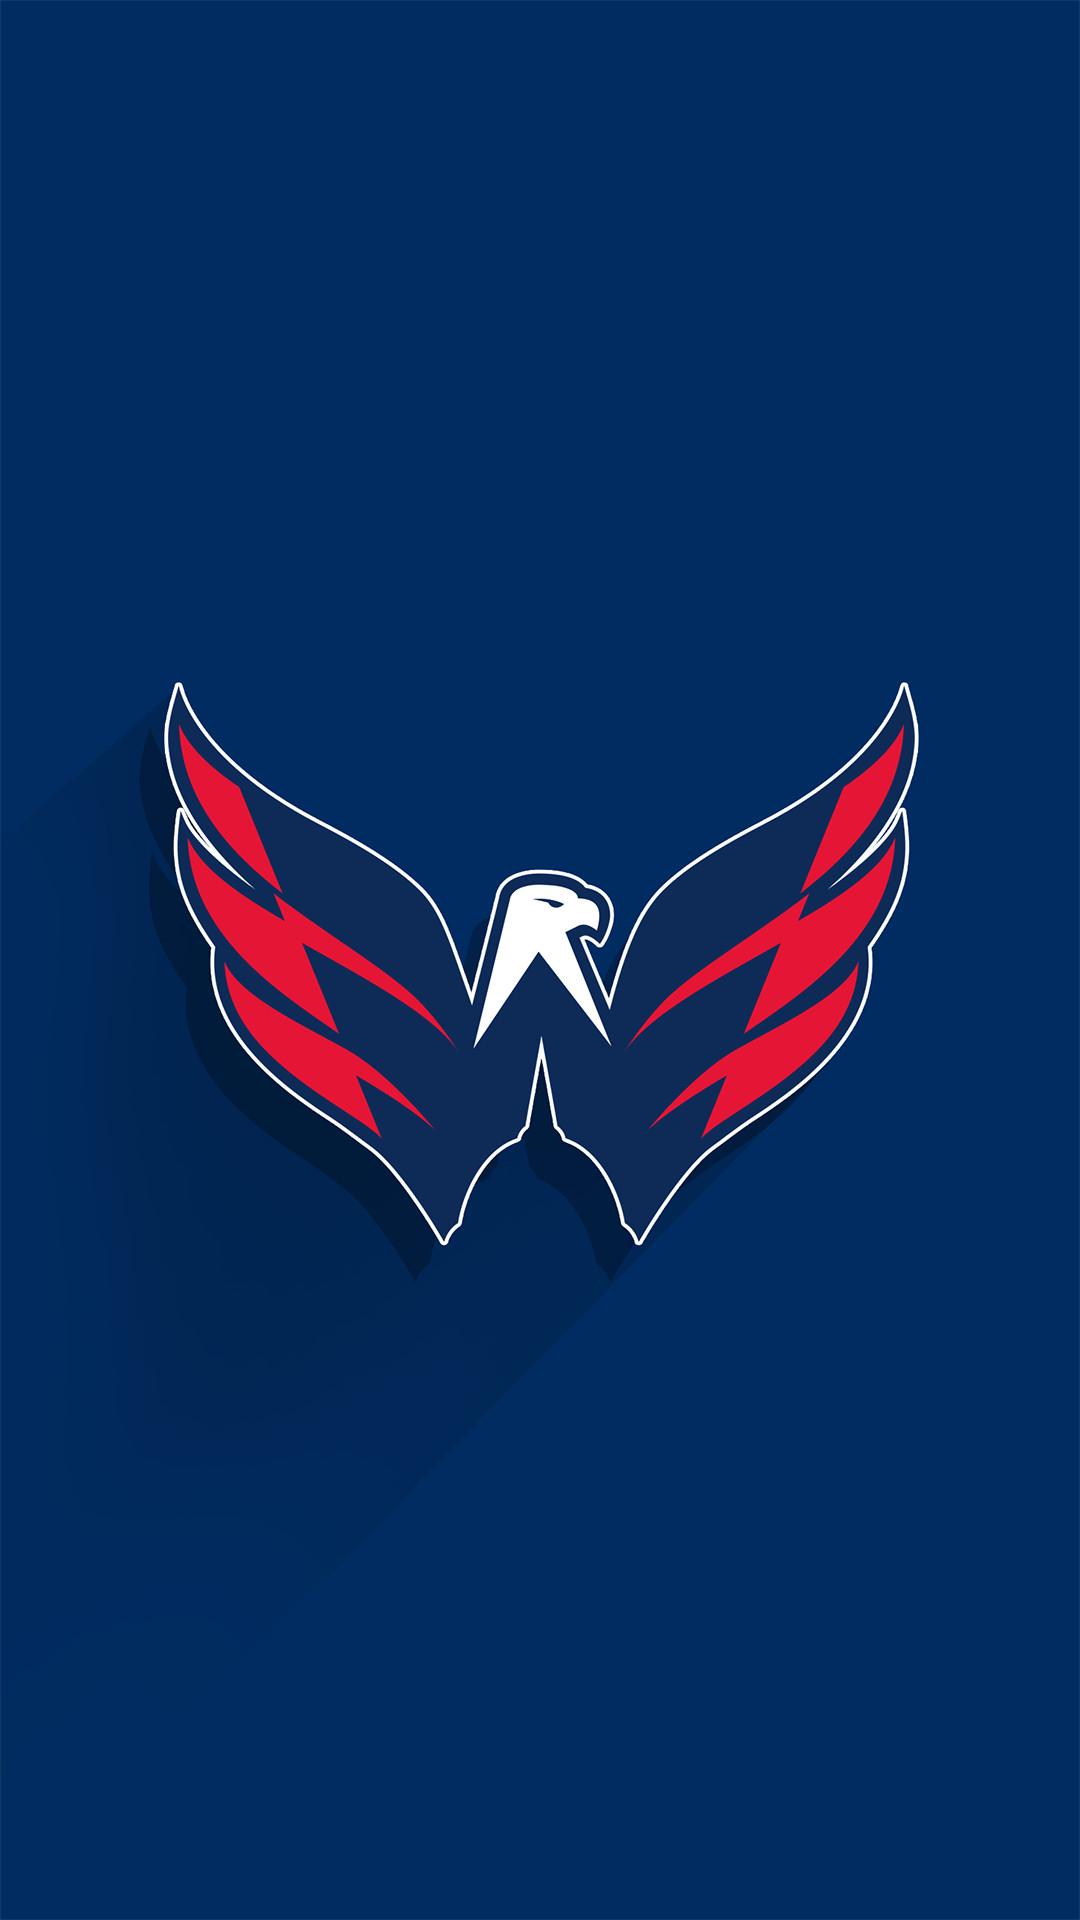 Washington Capitals - The Screaming Eagle is back! #ALLCAPS x